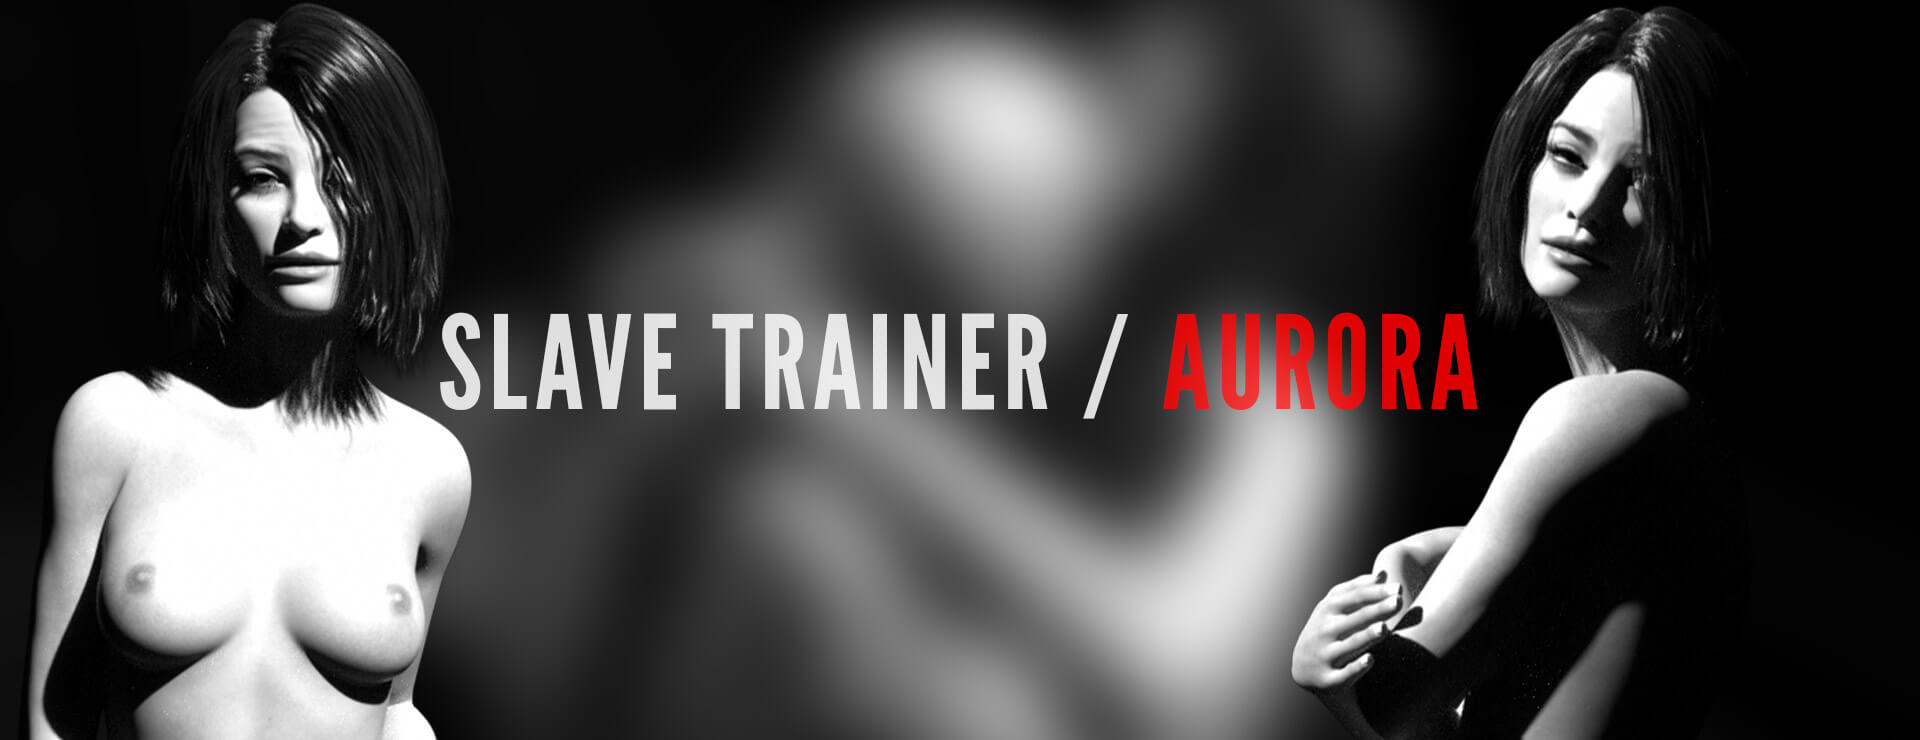 Slave Trainer Aurora - Symulacja Gra